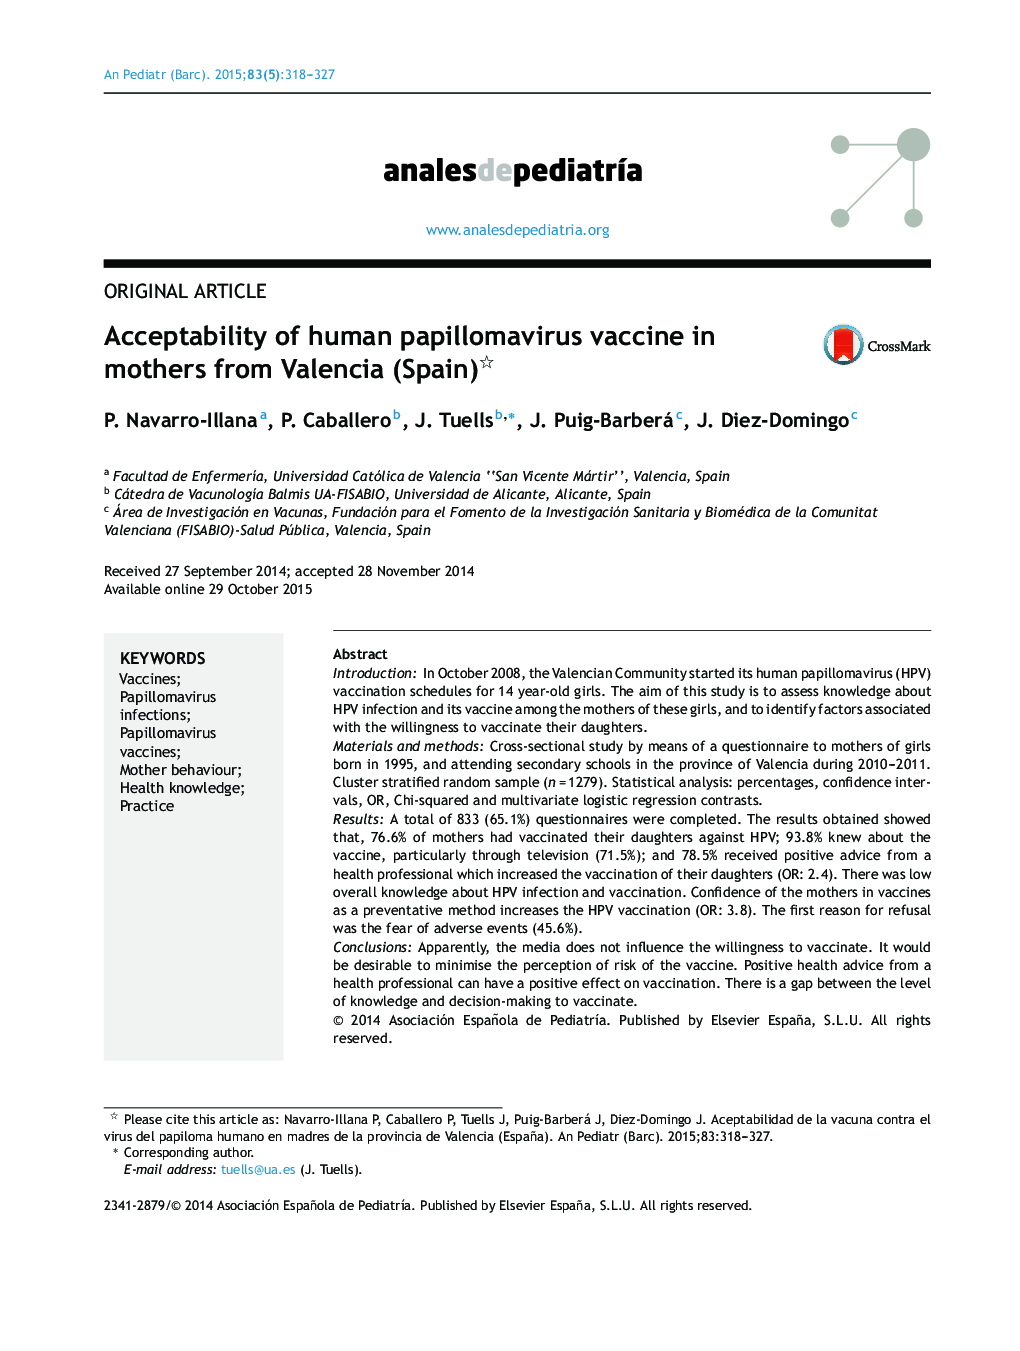 پذیرش واکسن پاپیلومای انسانی در مادران والنسیا (اسپانیا) 